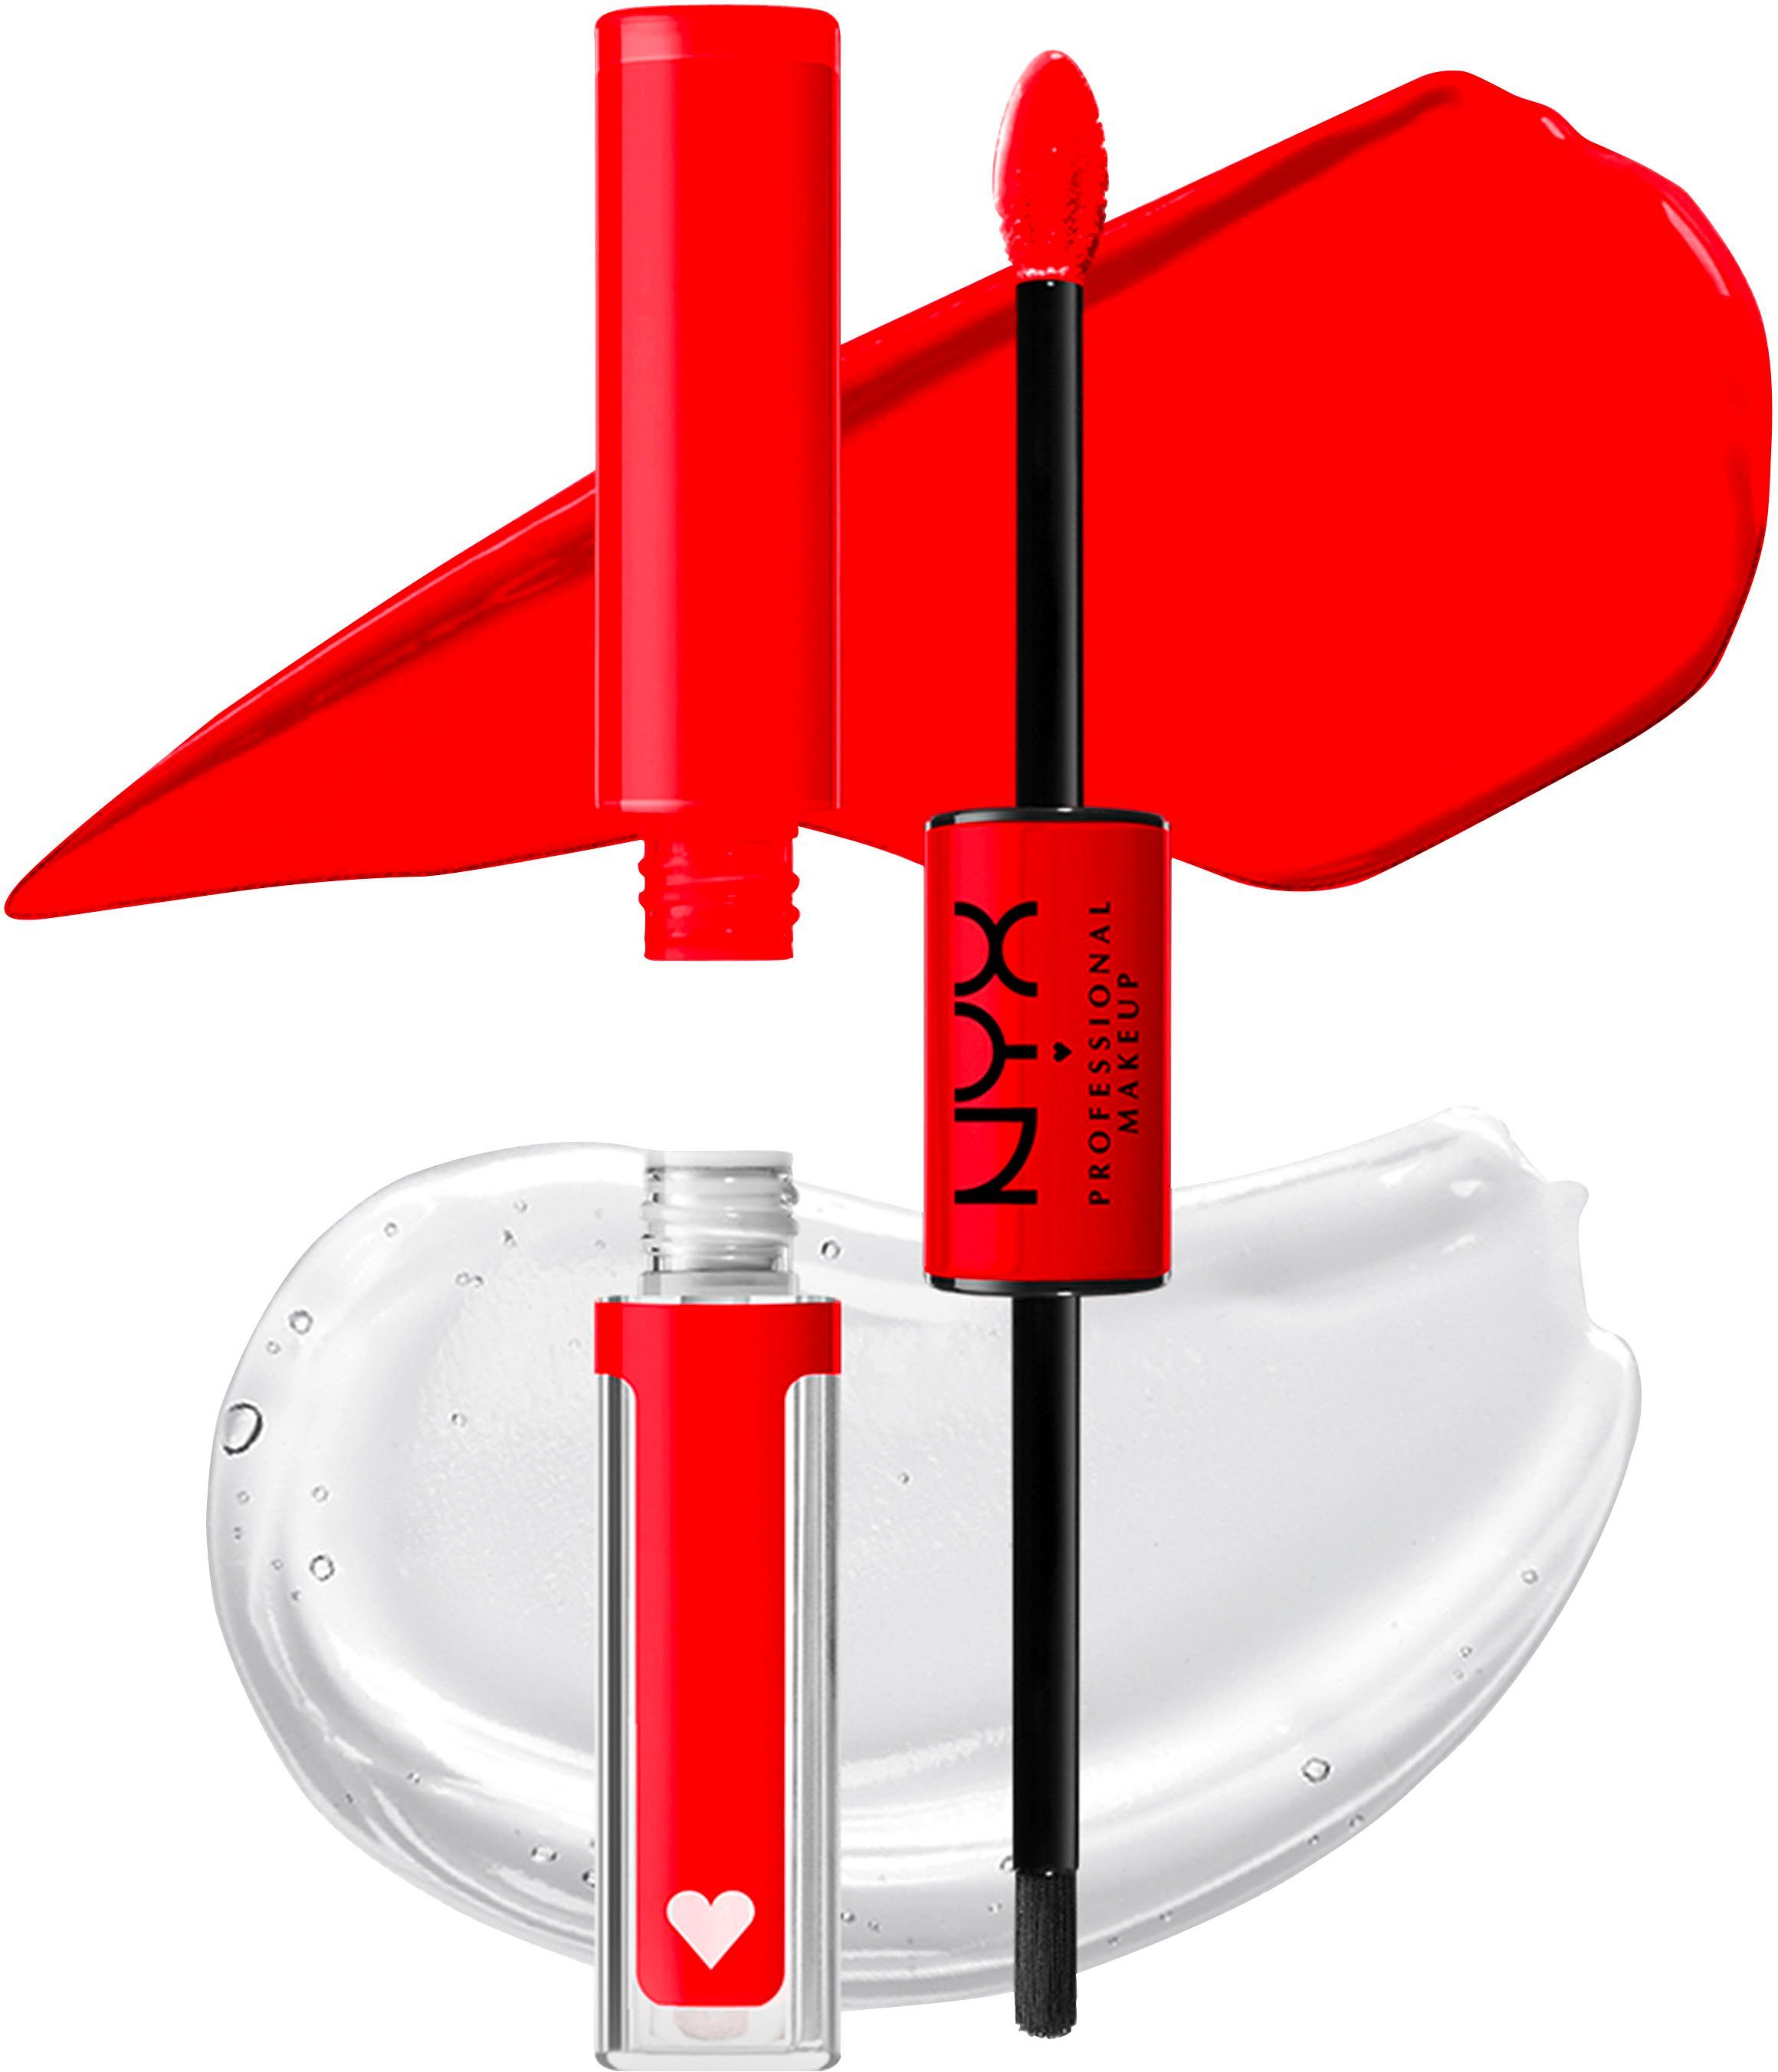 Applikator Red Professional Lip geformtem High präziser Lippenstift Shine Makeup mit Pigment Auftrag Shine, NYX Loud Rebel In